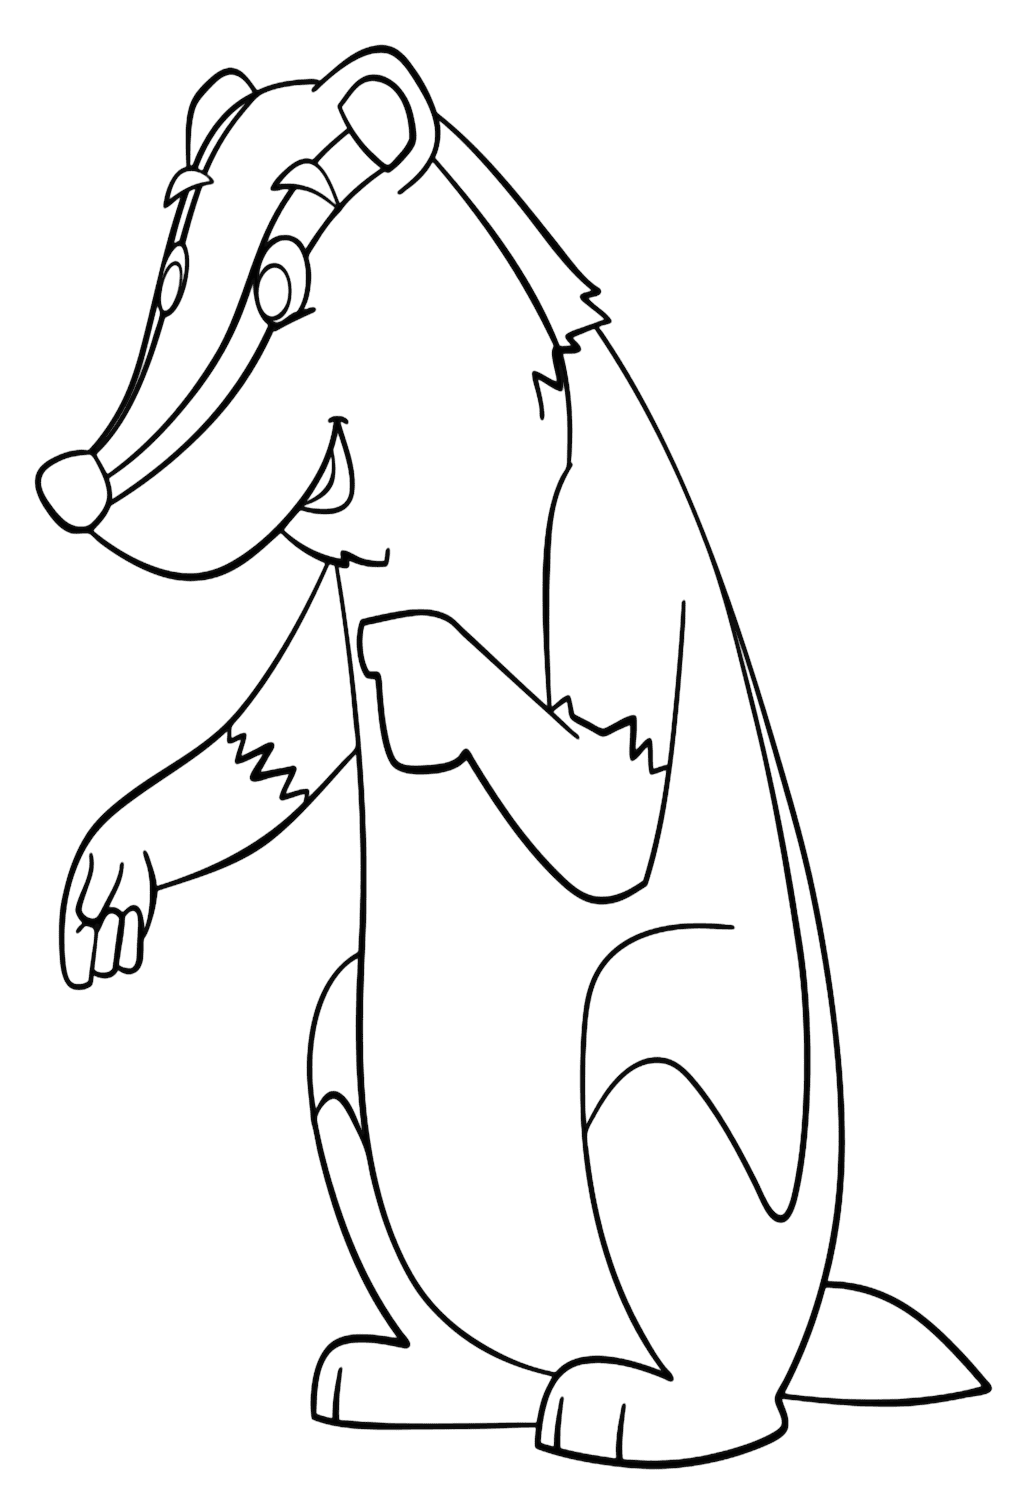 Página para colorir de texugo de desenho animado de Badger